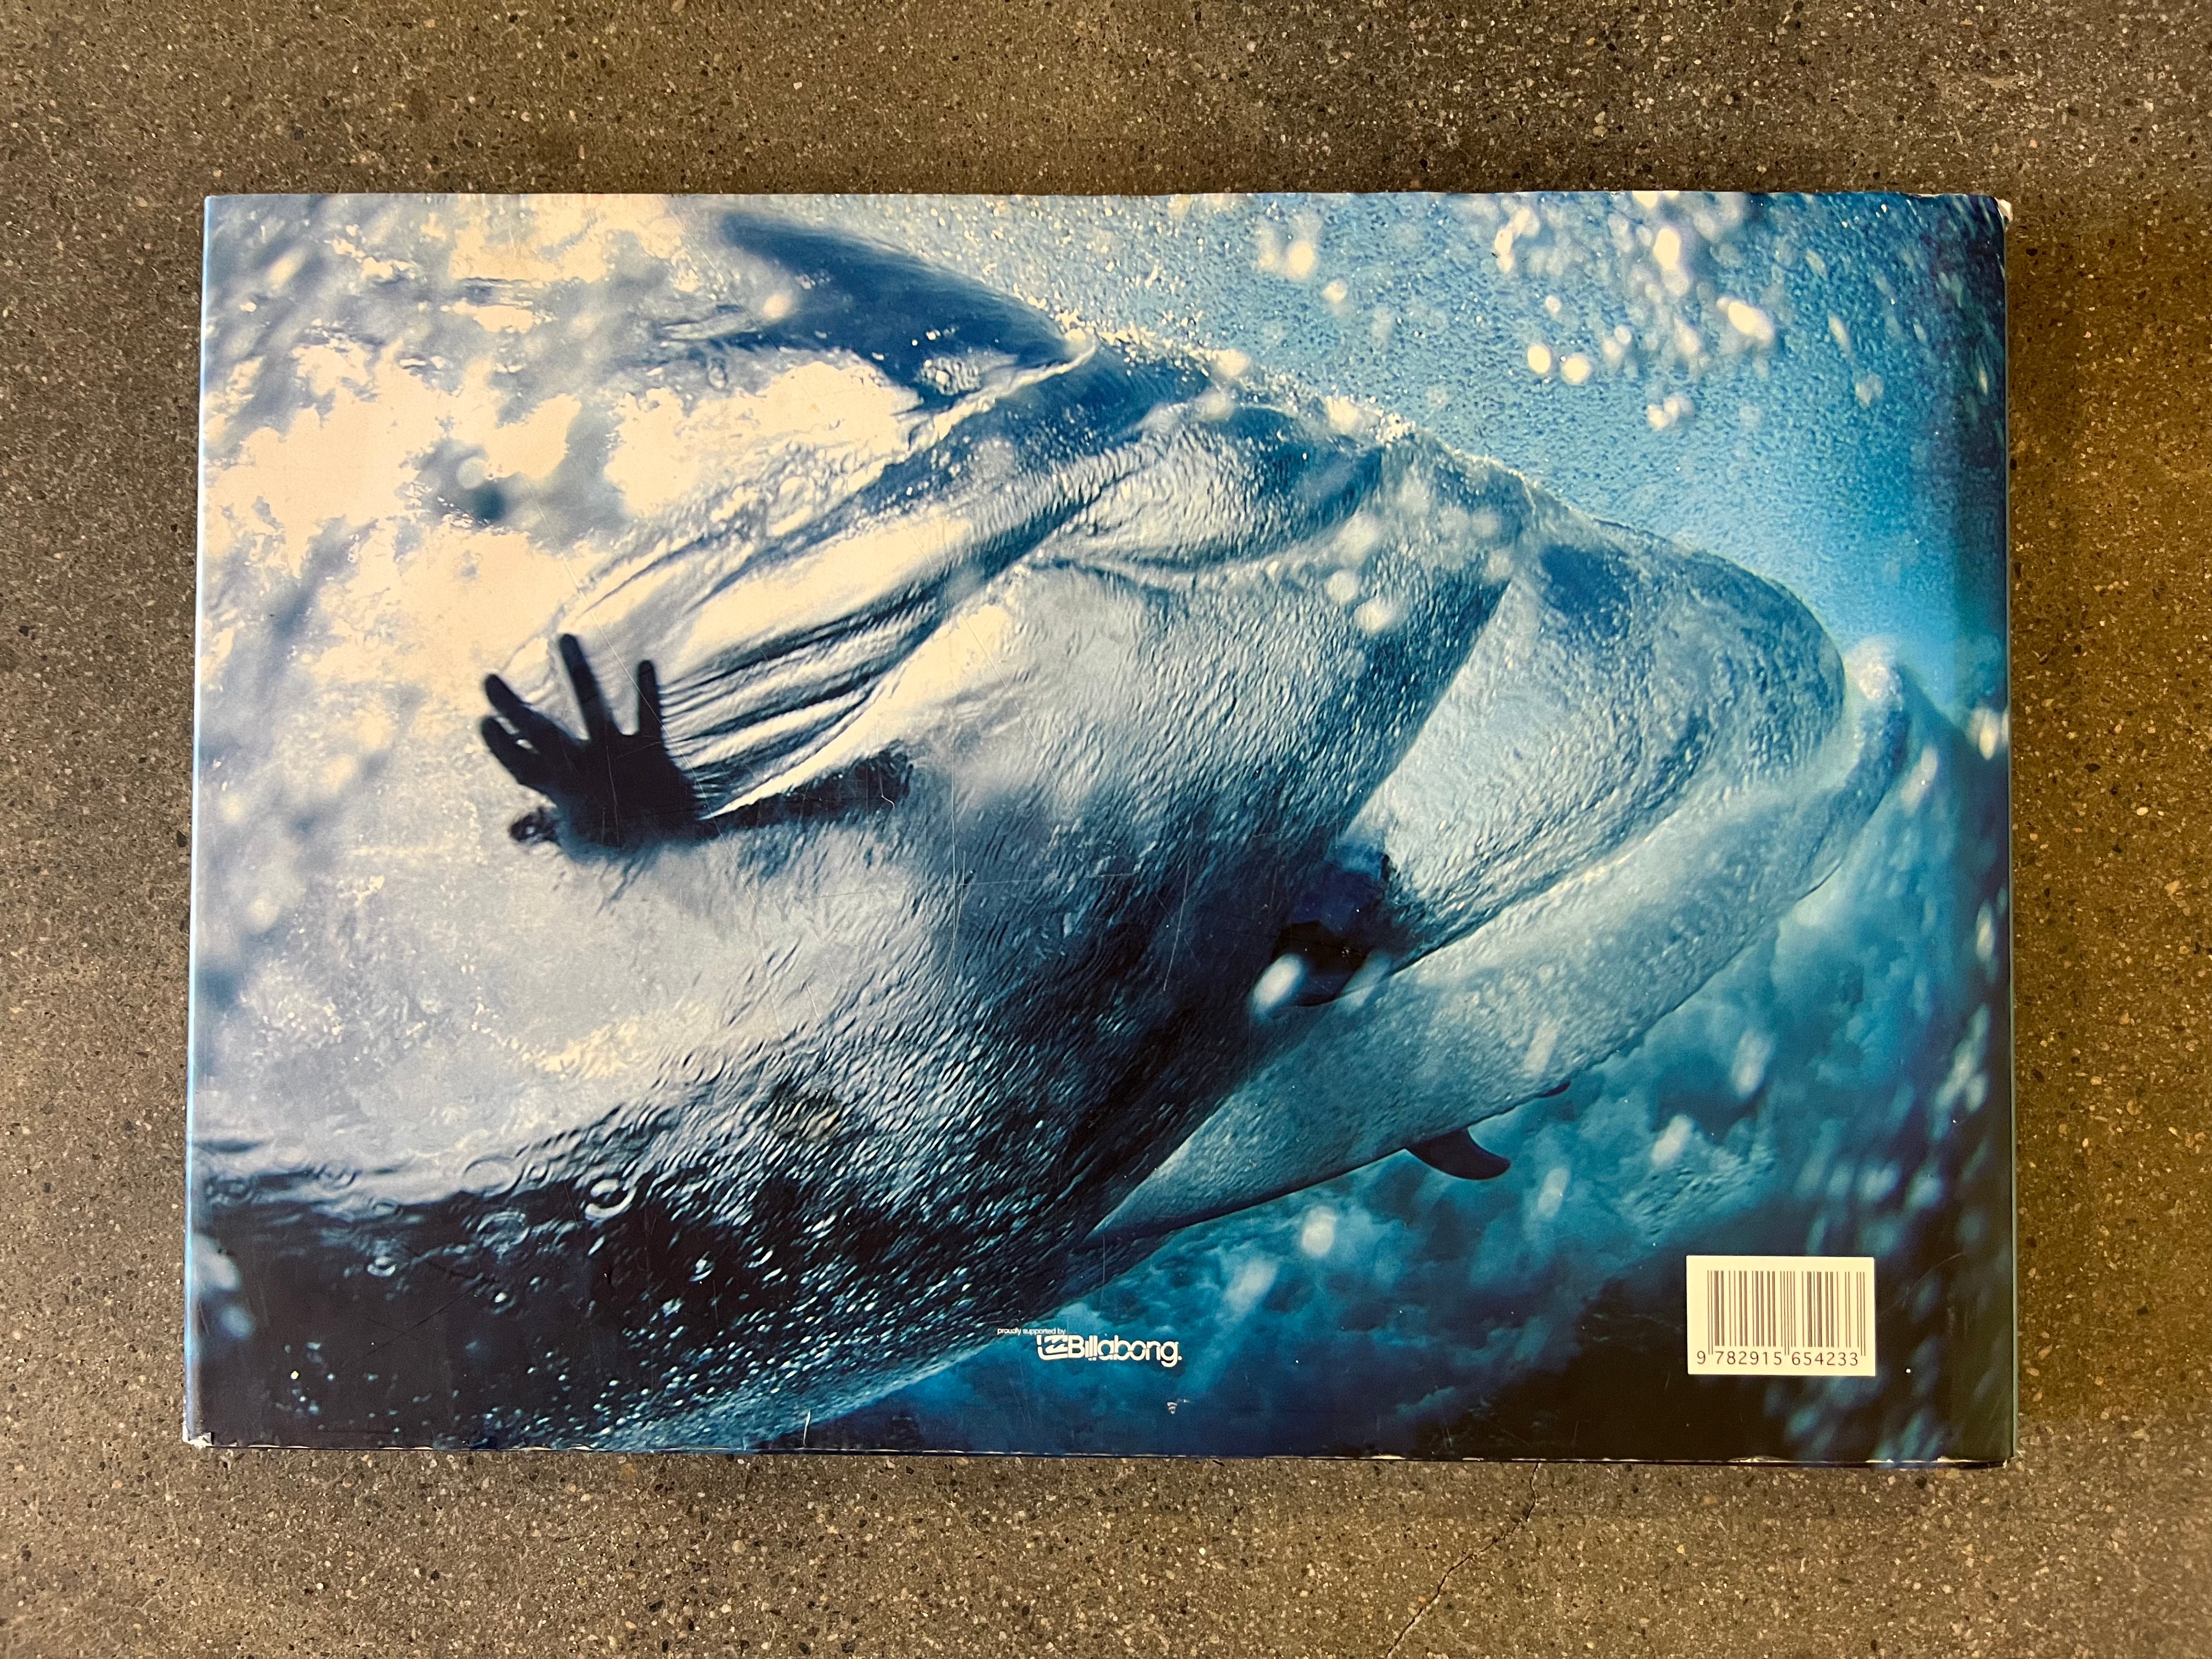 Teahupoo Tahiti's Mythical Wave  Book